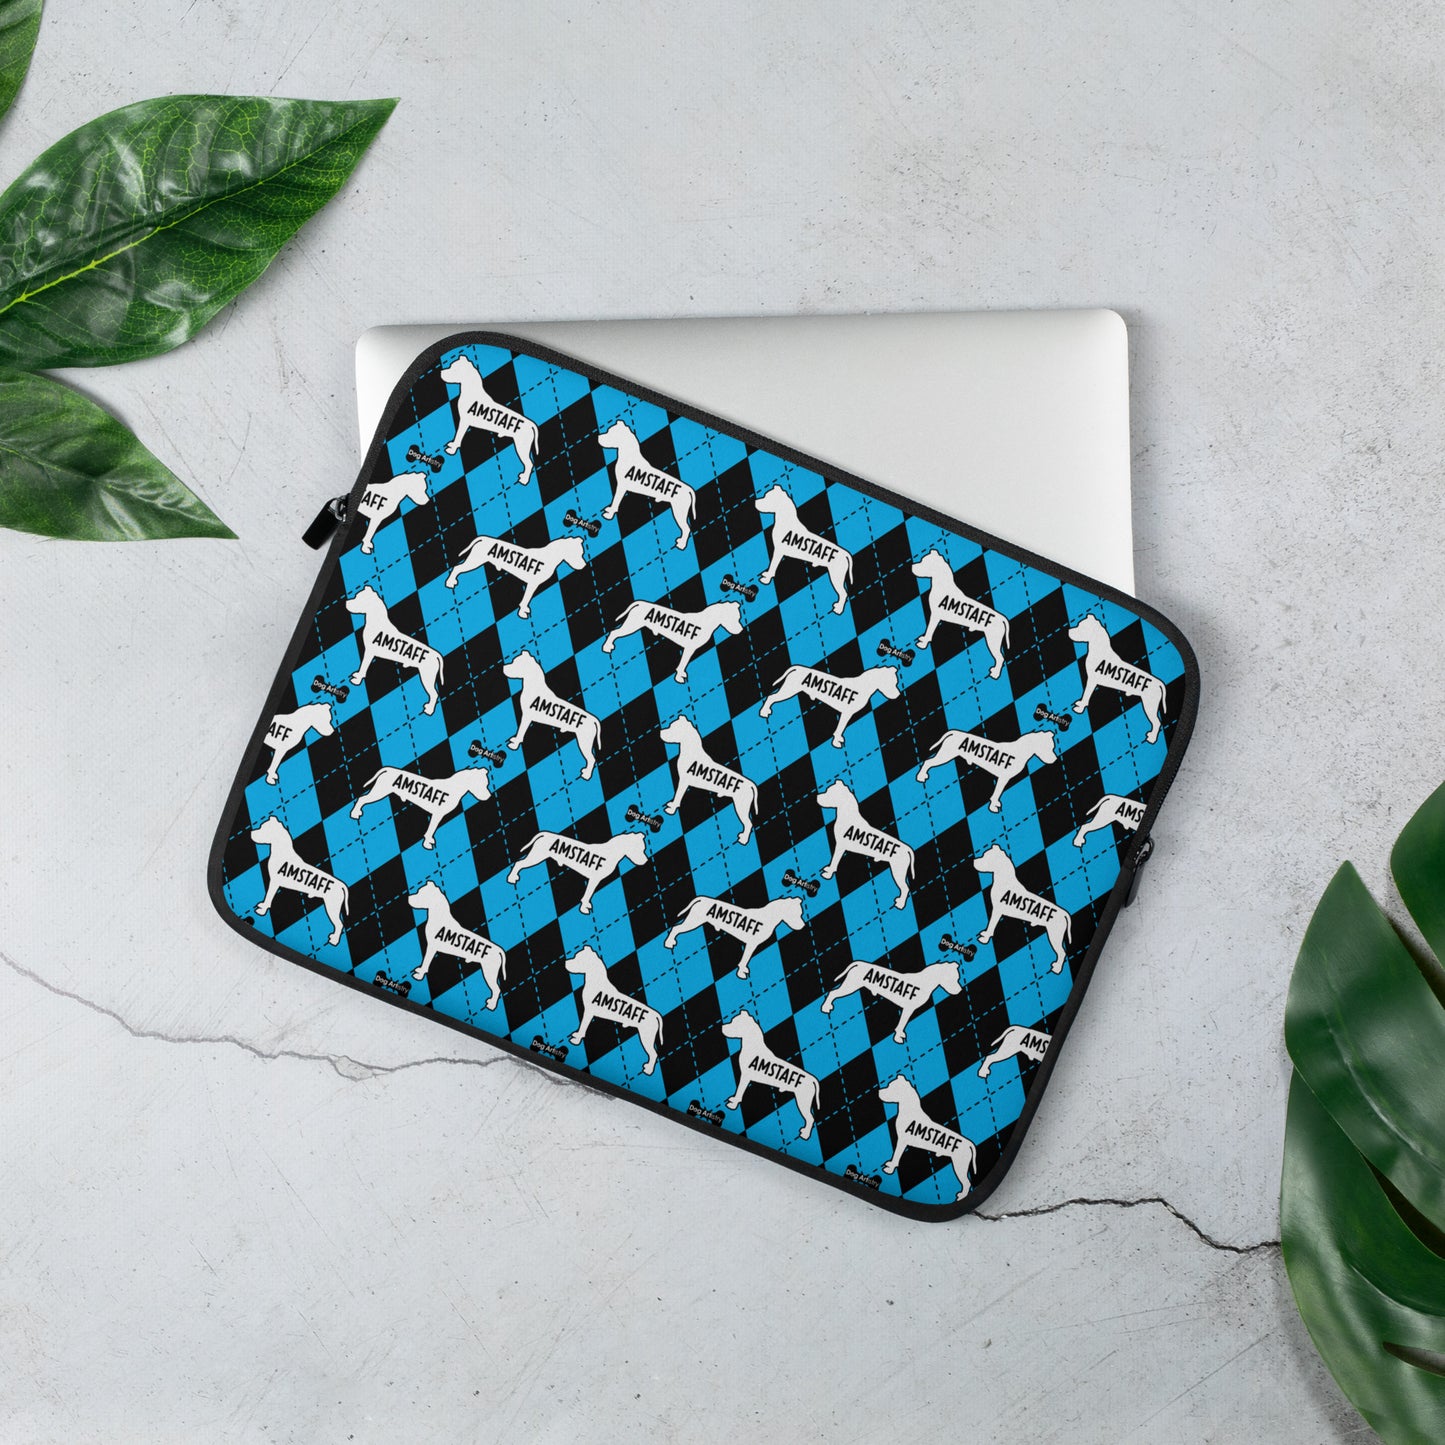 Amstaff blue and black argyle laptop sleeve by Dog Artistry